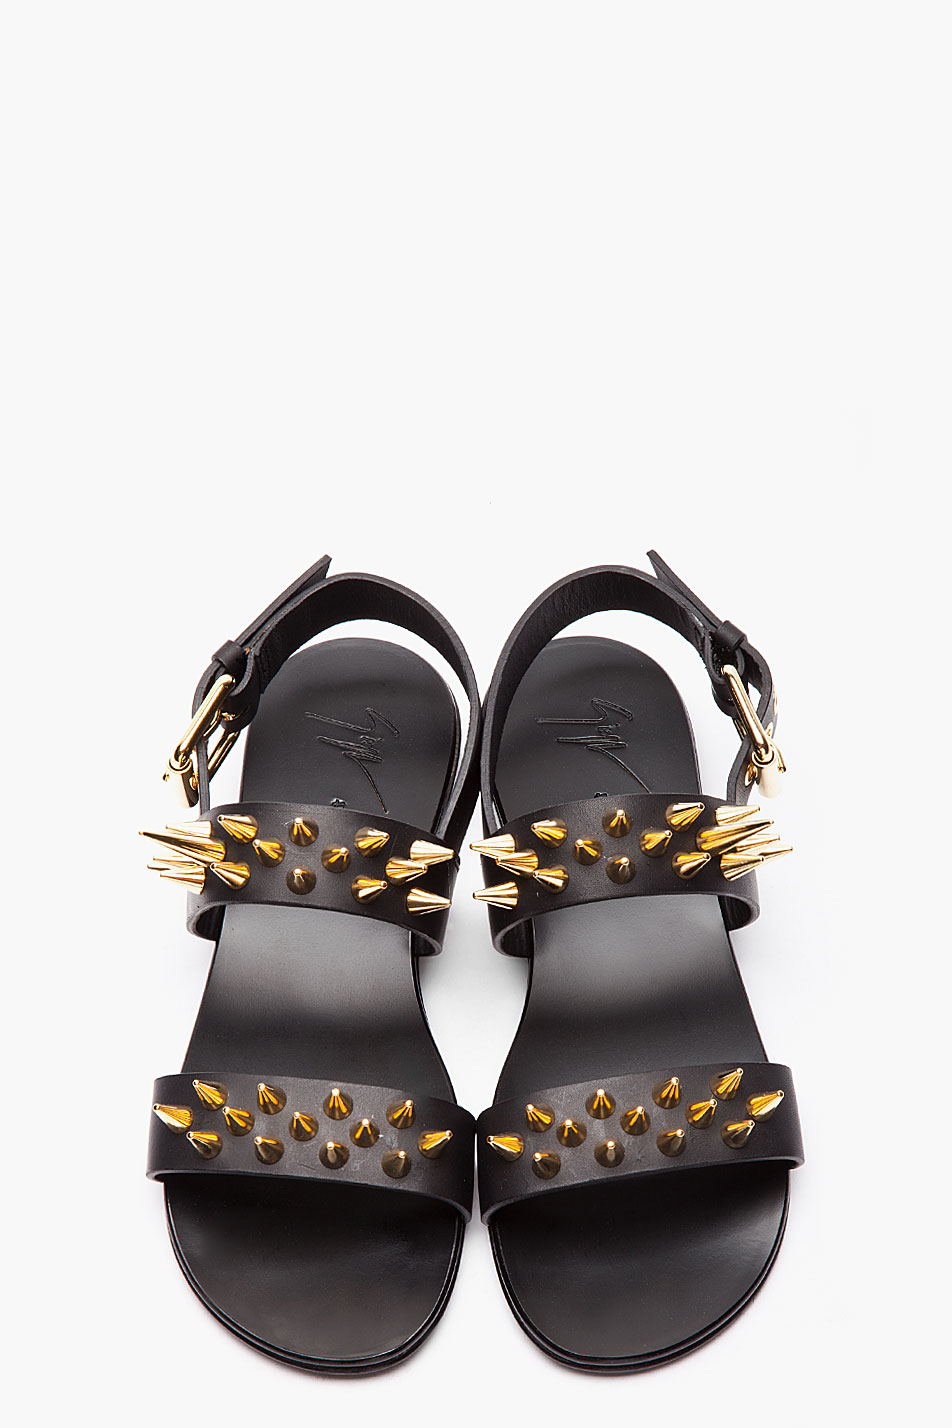 Giuseppe Zanotti Black Leather and Gold Studded Zak 10 Sandals for Men -  Lyst